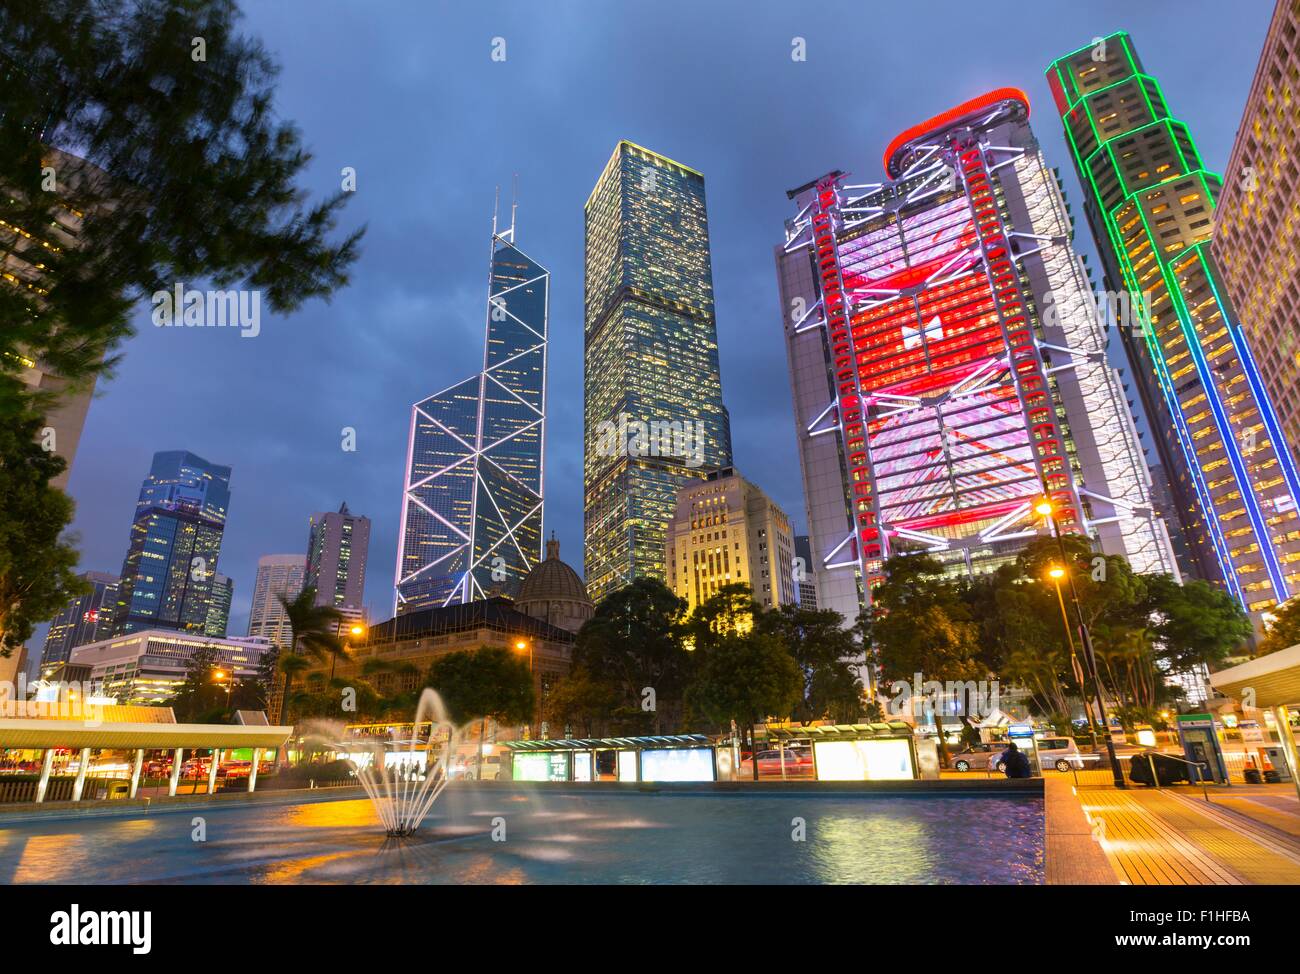 Statue quadratische Gebäude beleuchtet in der Nacht, Hong Kong, China Stockfoto